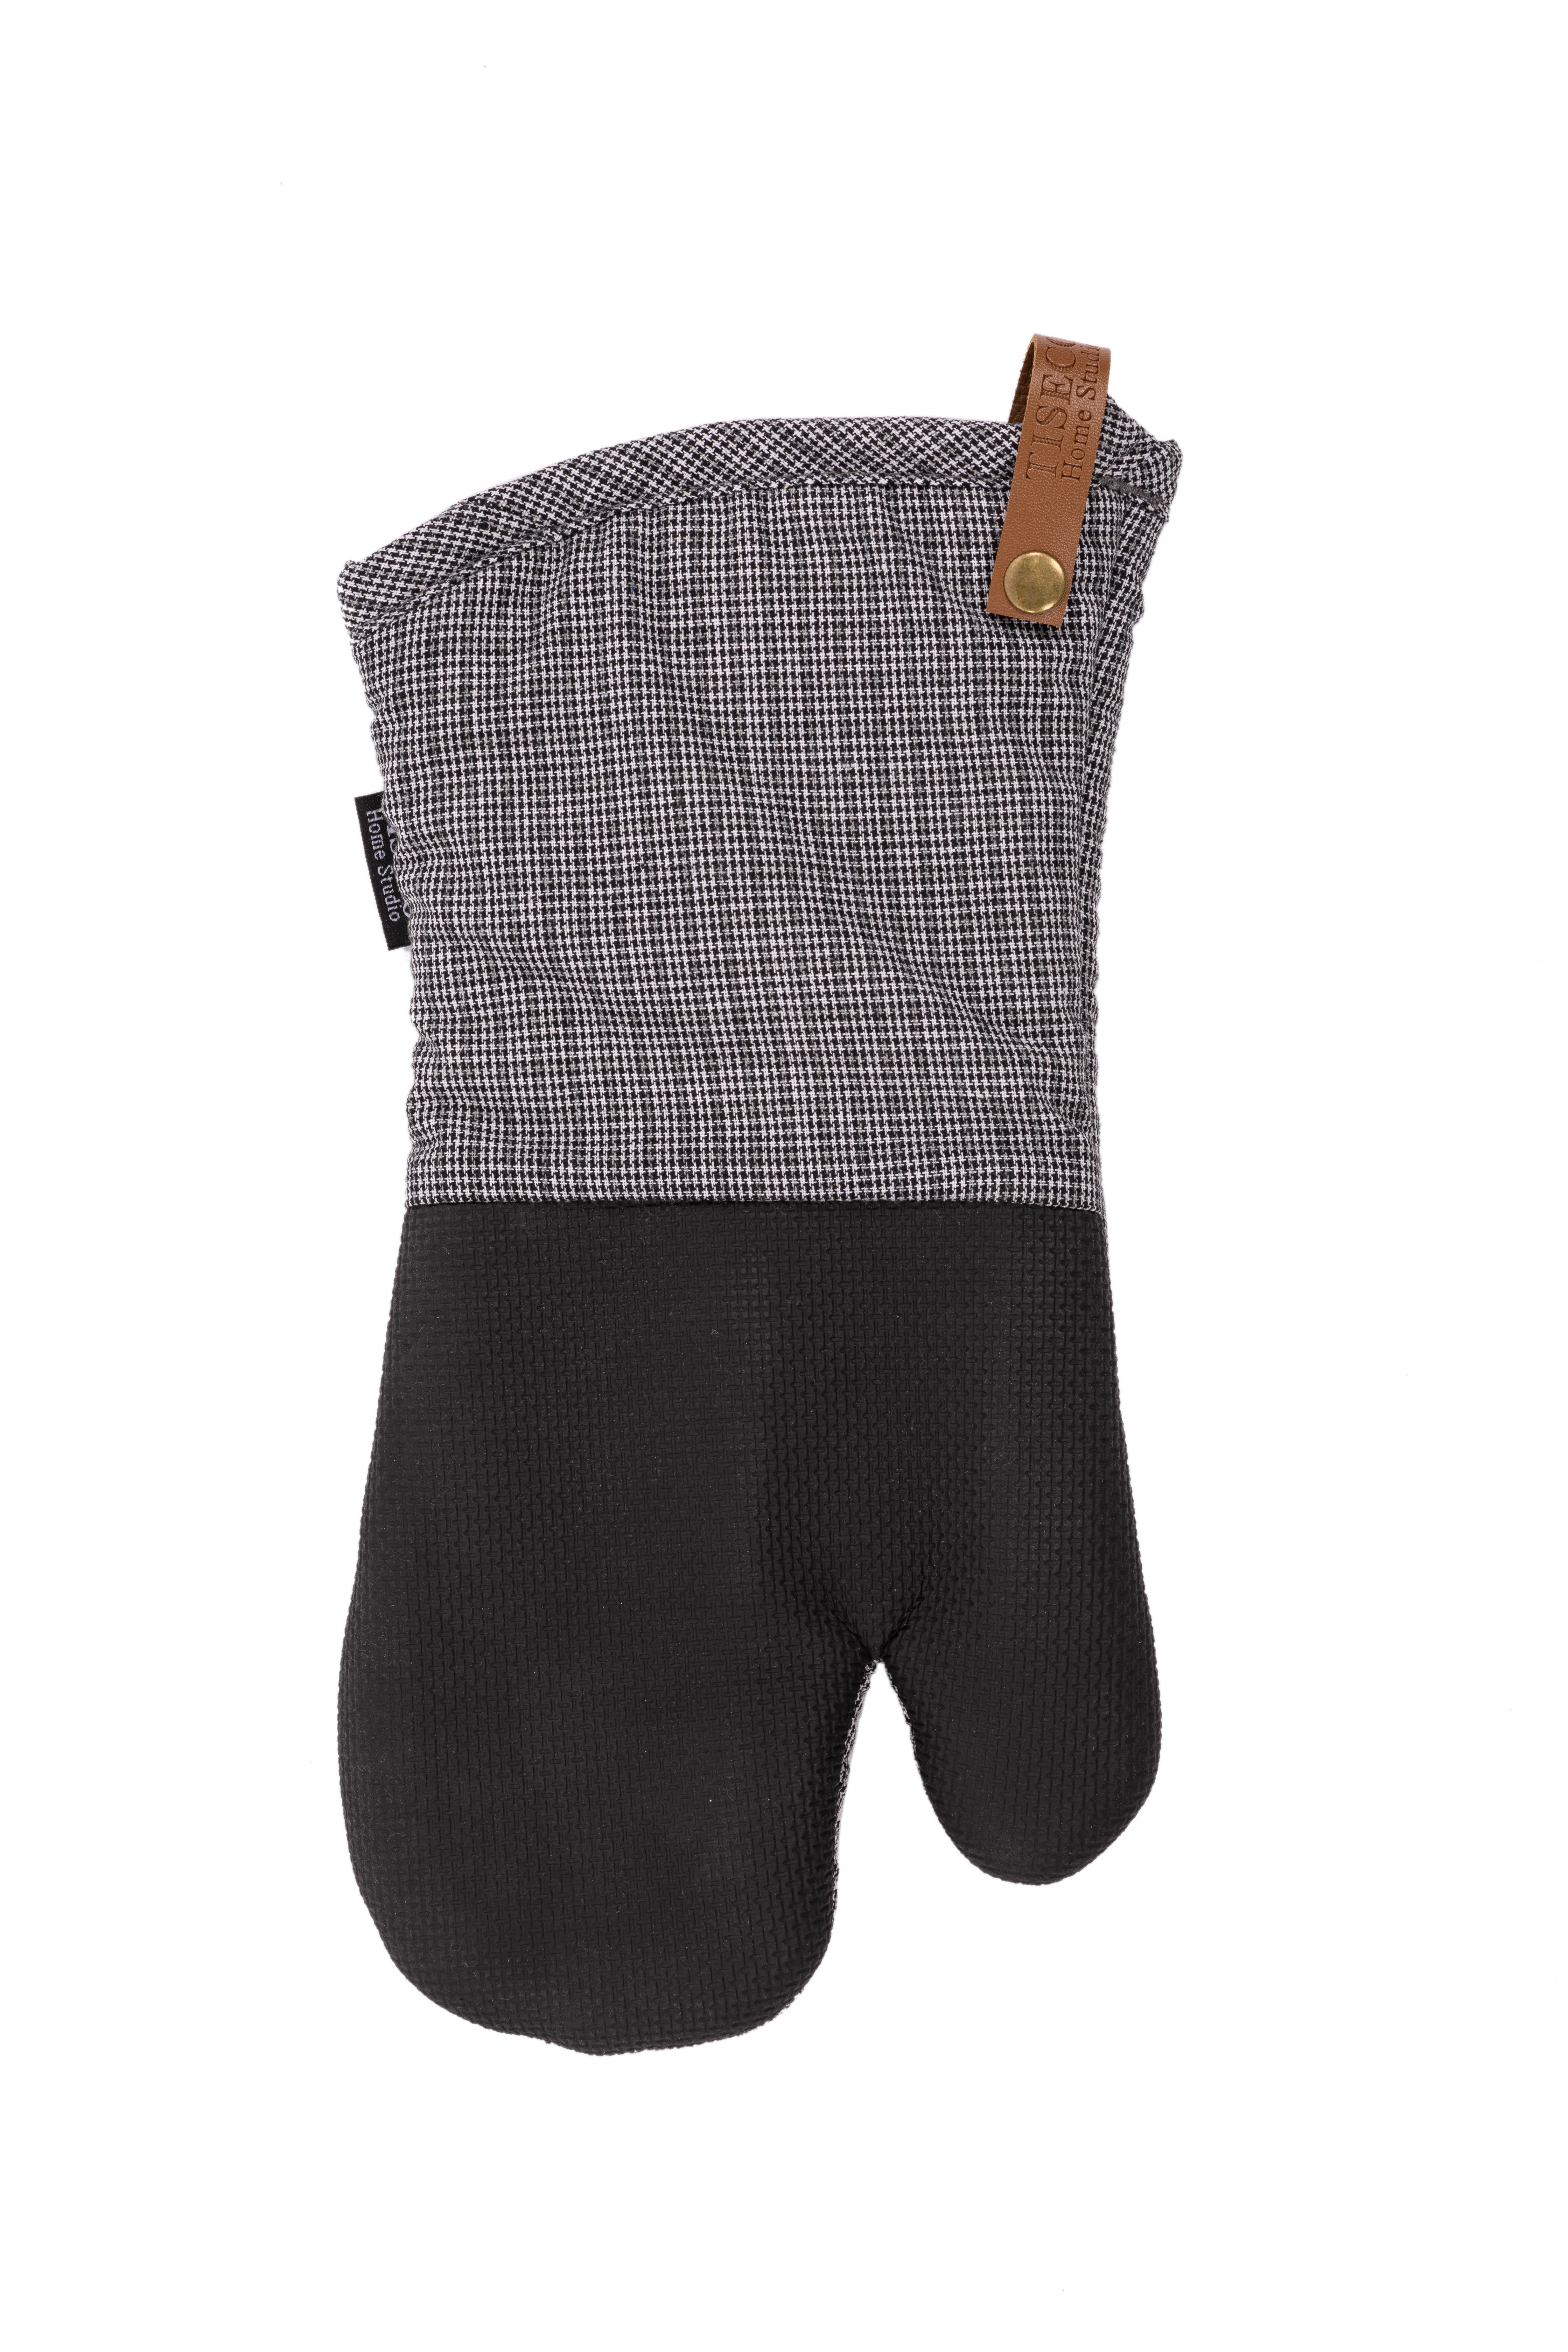 Oven glove (1R + 1L) SHERLOCK Houndstooth, 17x33cm, black